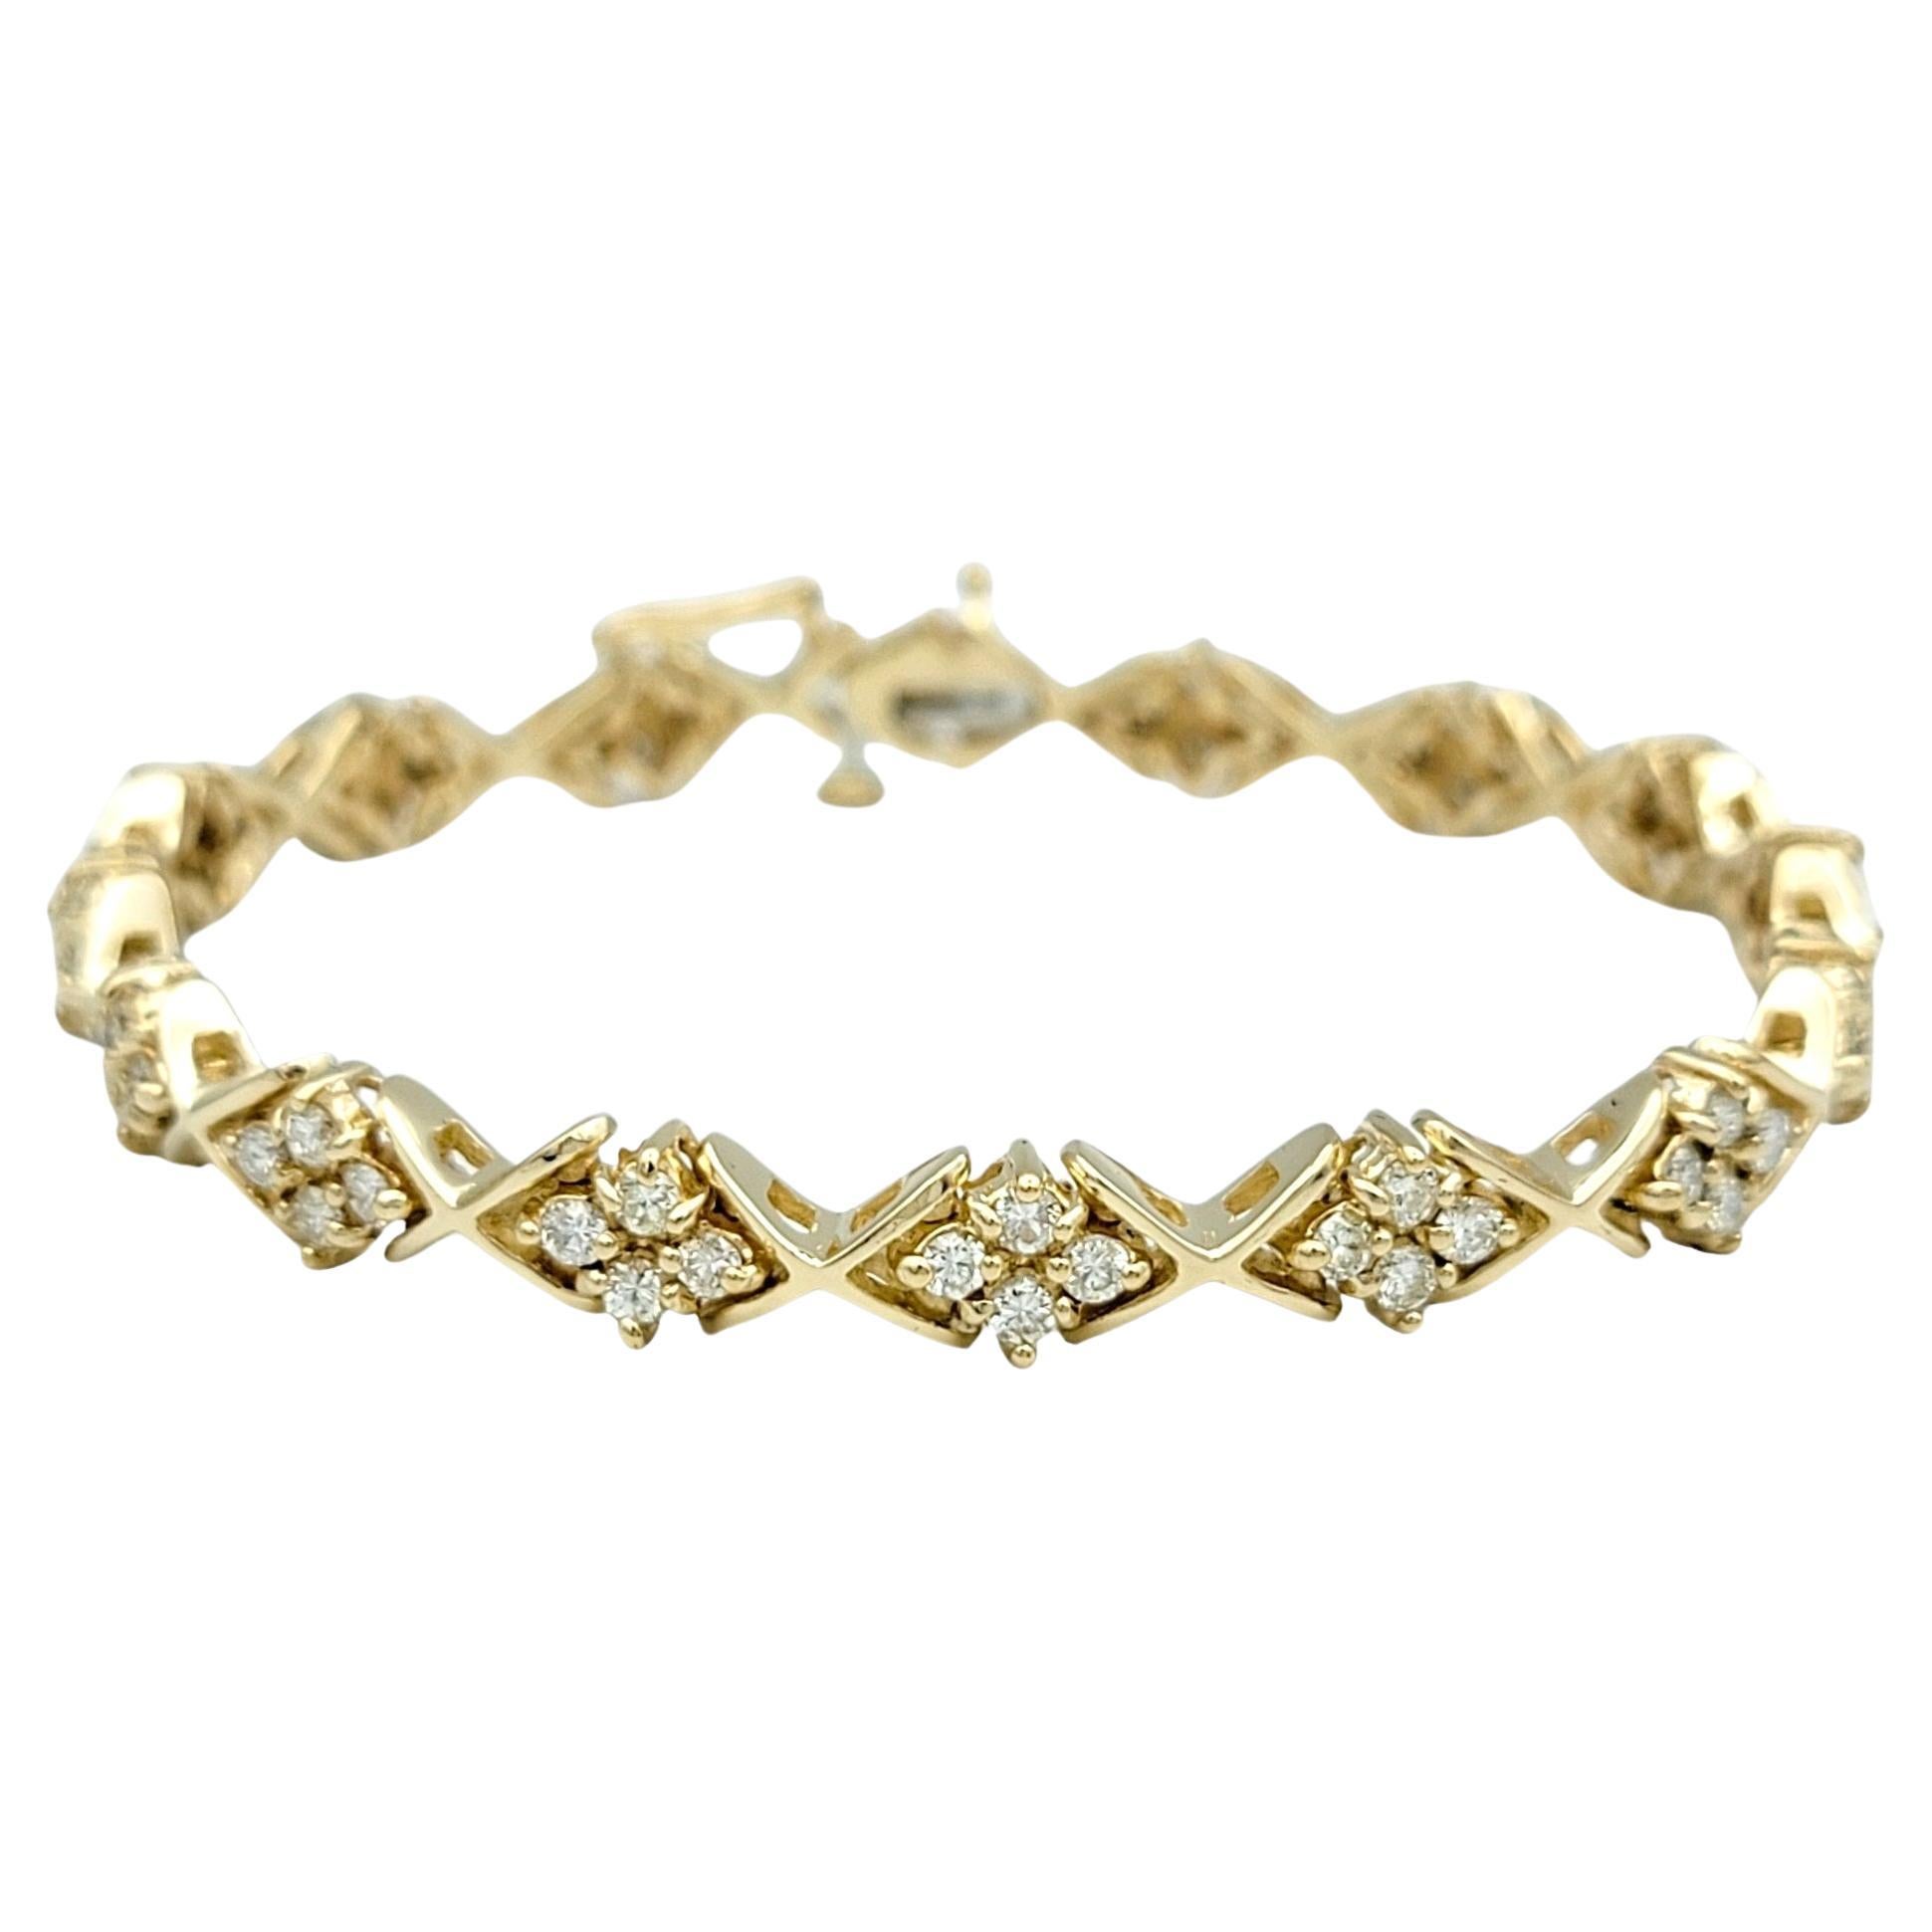 2.00 Carat Total Round Diamond Criss-Cross Link Bracelet in 14 Karat Yellow Gold For Sale